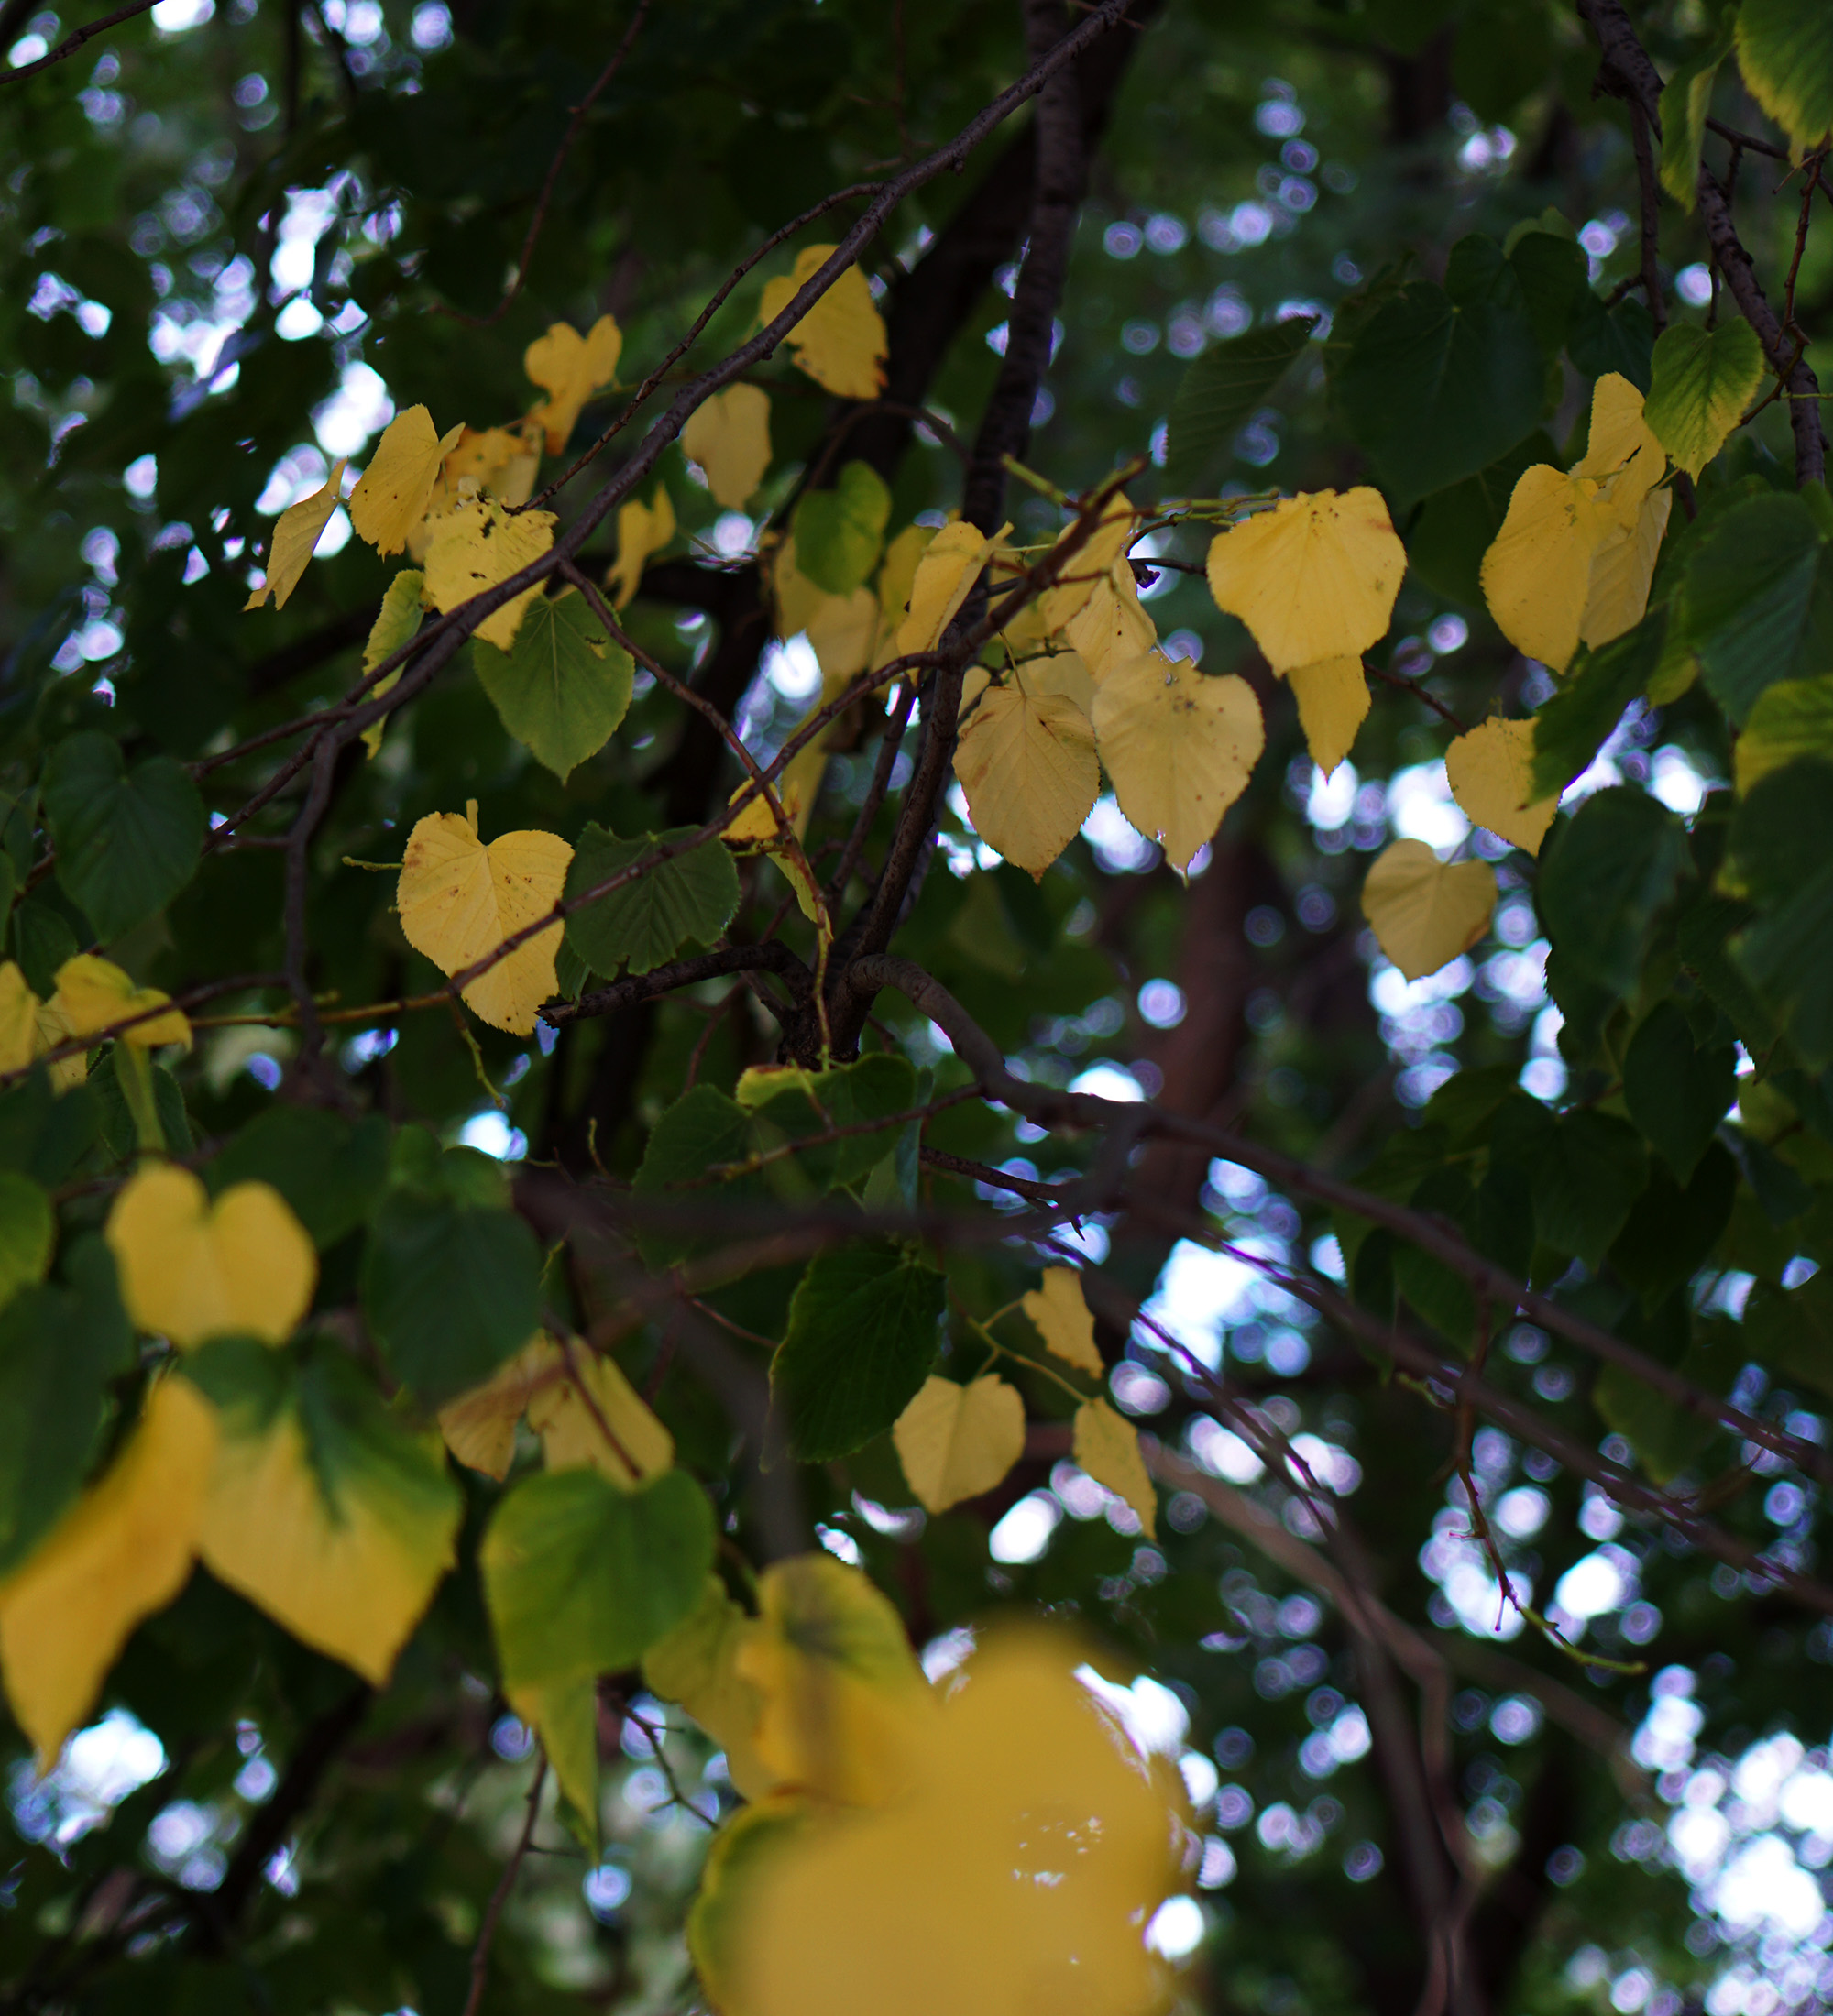 Leaves turning yellow / Darker than Green